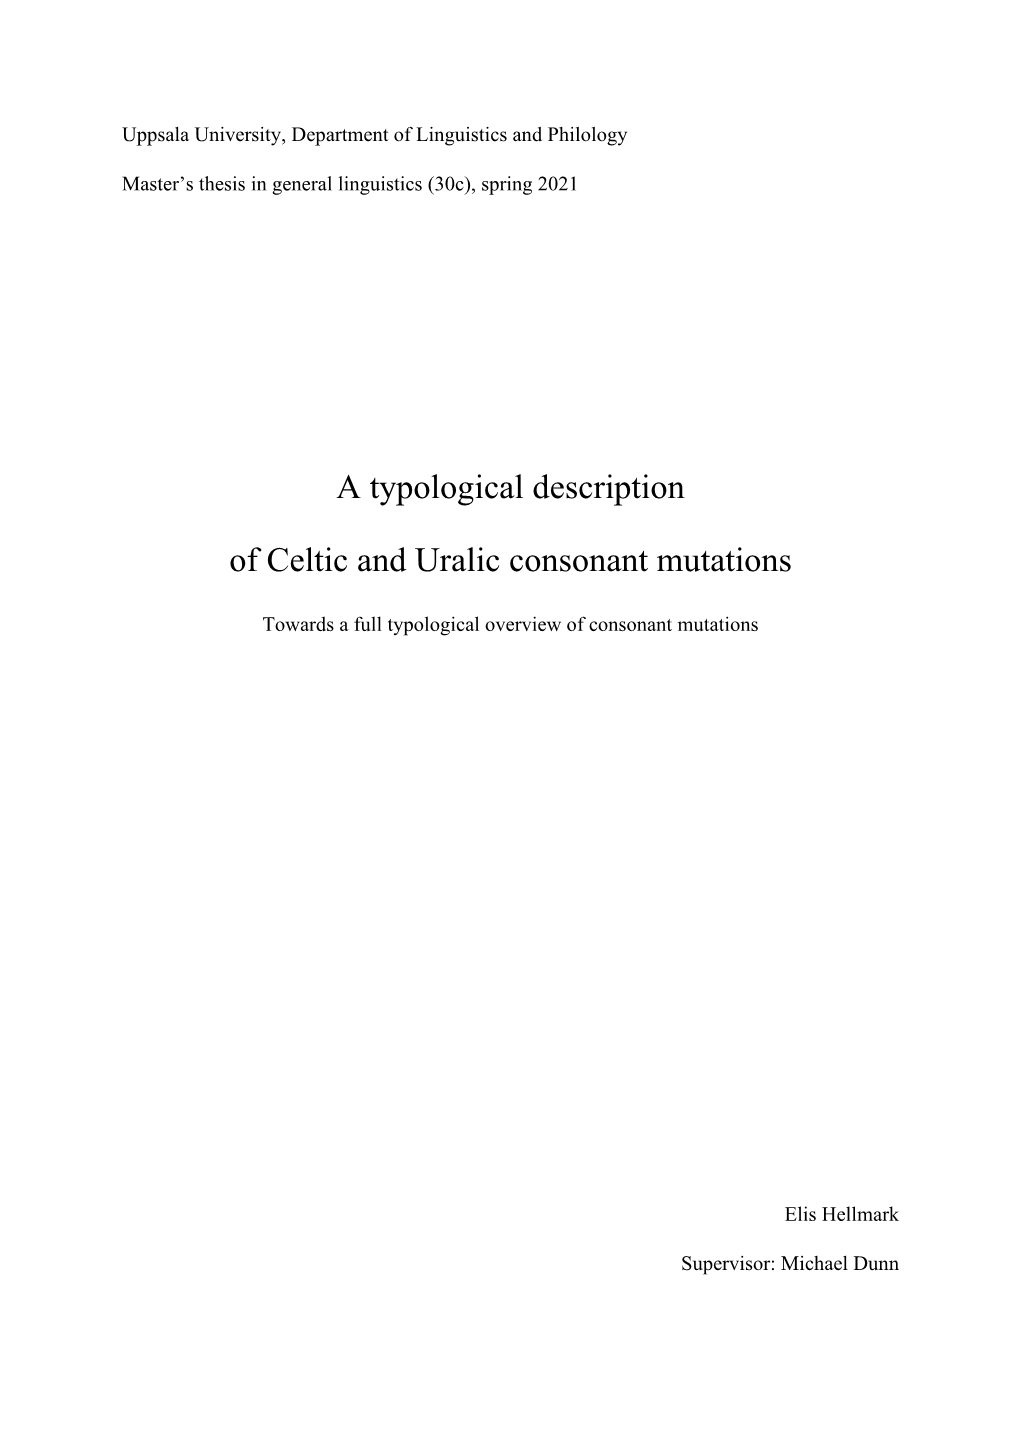 A Typological Description of Celtic and Uralic Consonant Mutations